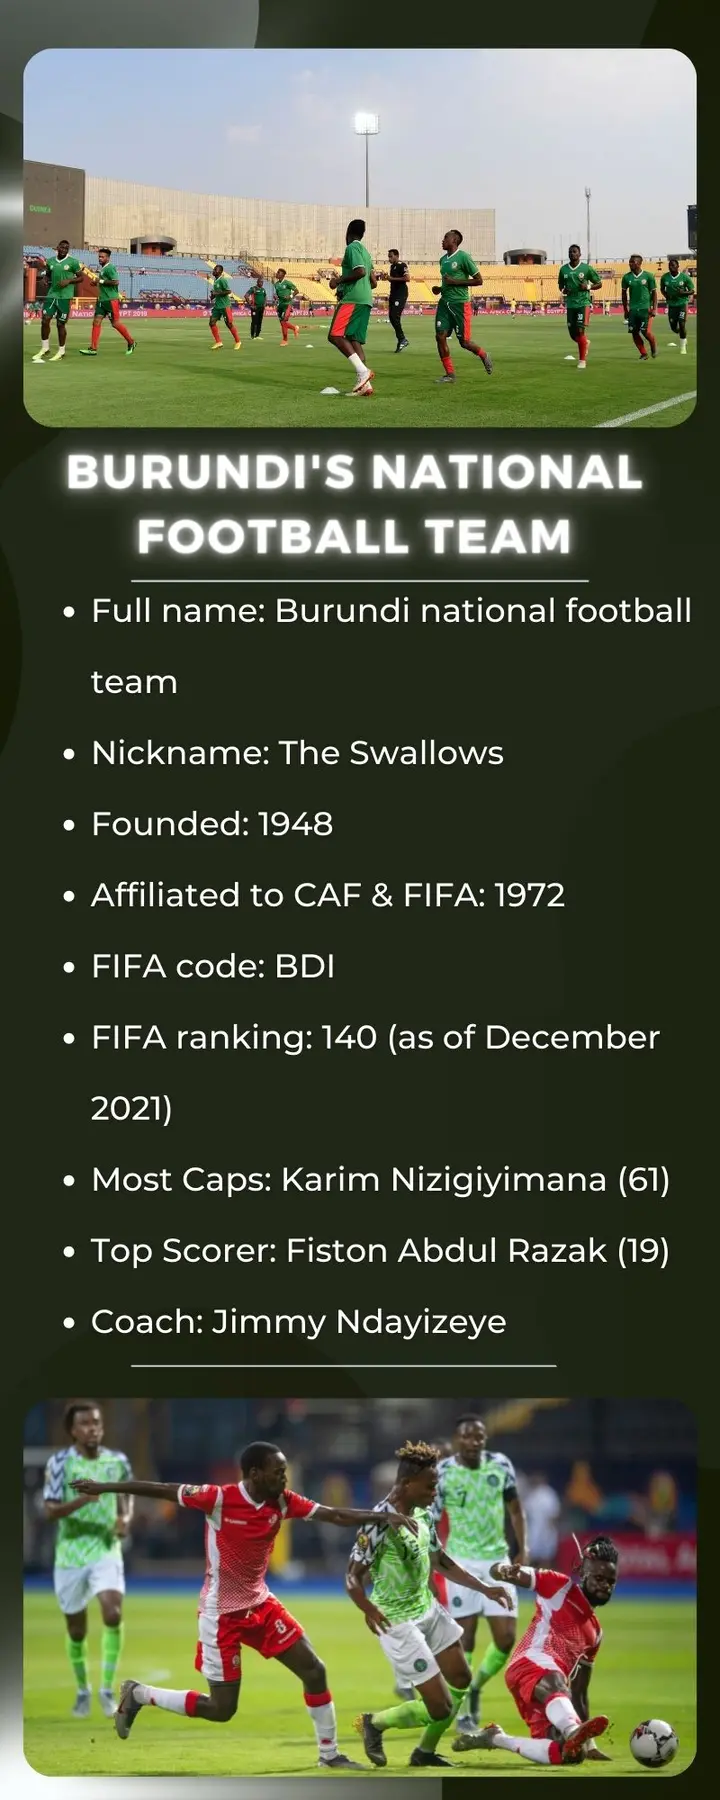 Burundi's national football team